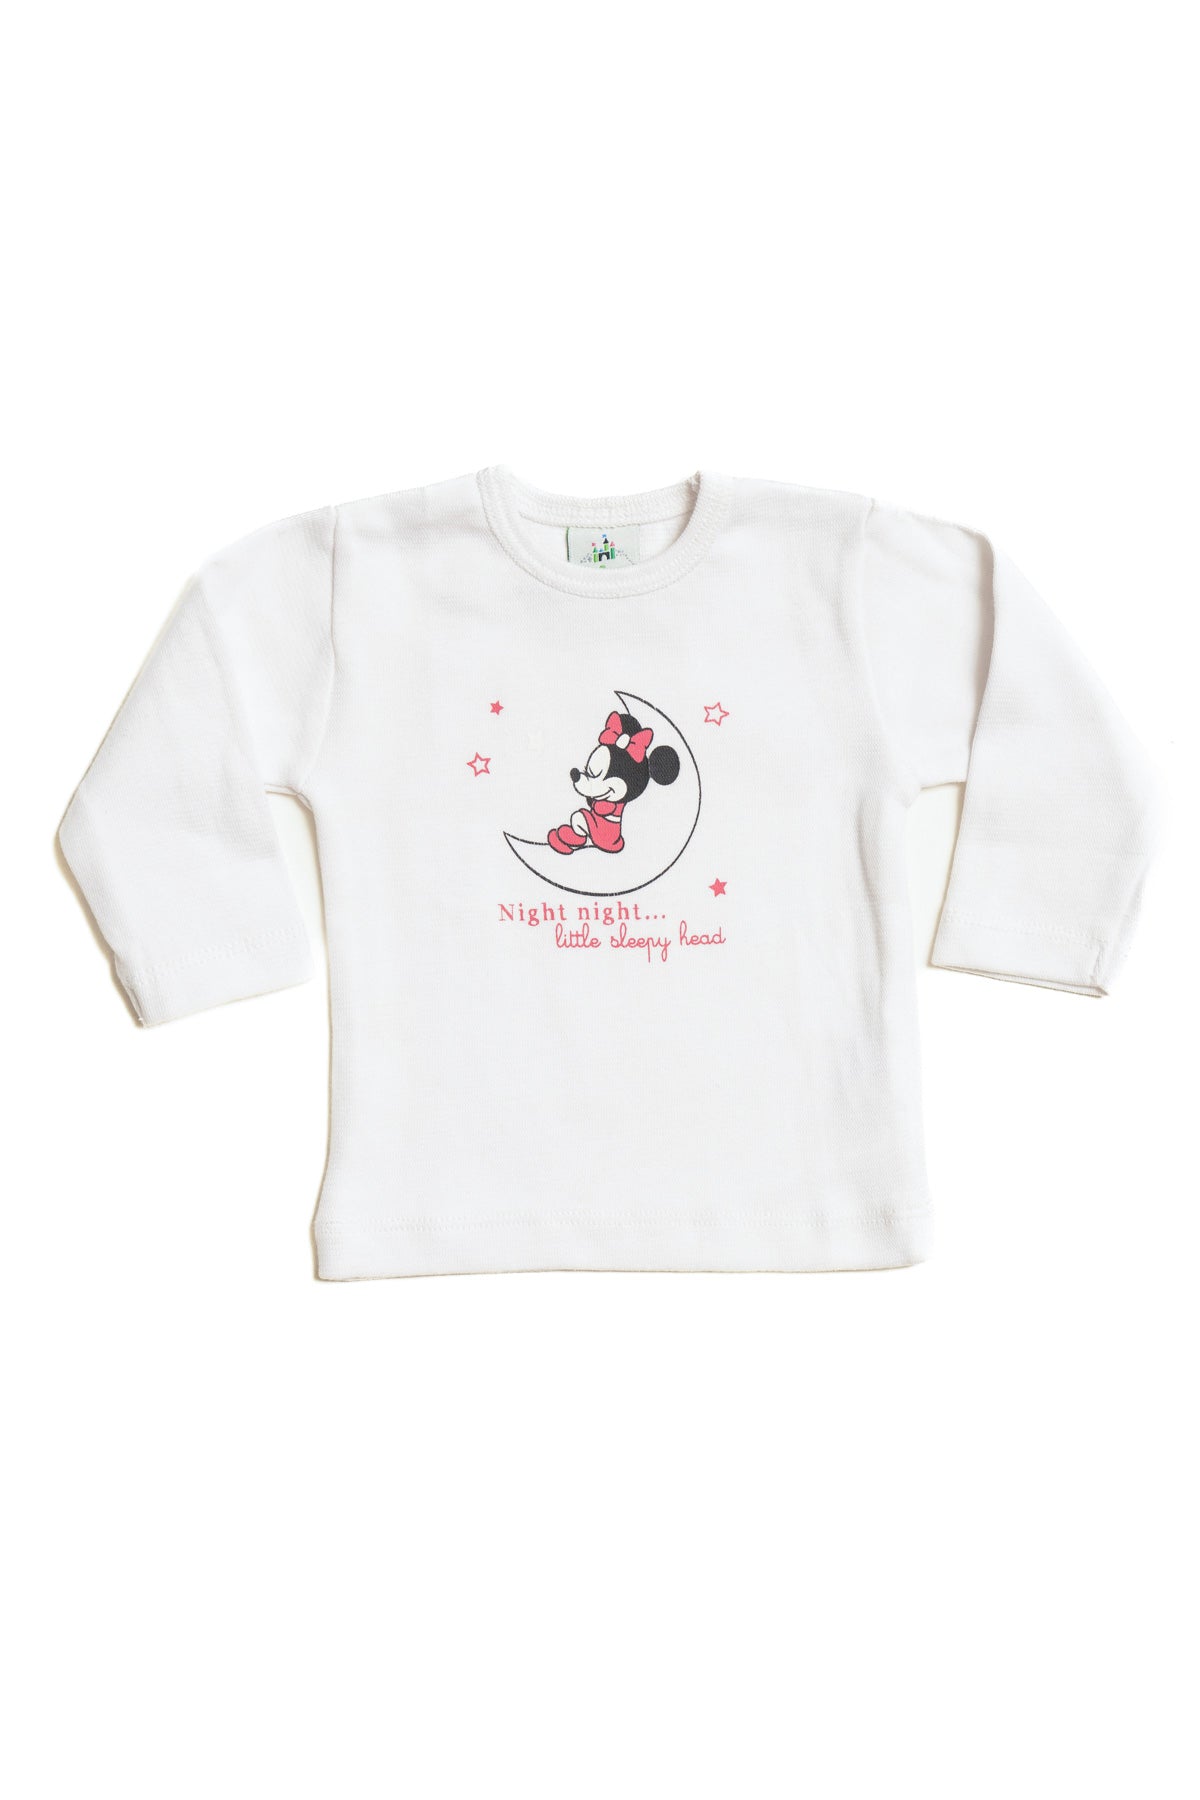 T-Shirt Baby Minnie " Little Sleepy "Sleeve 4006